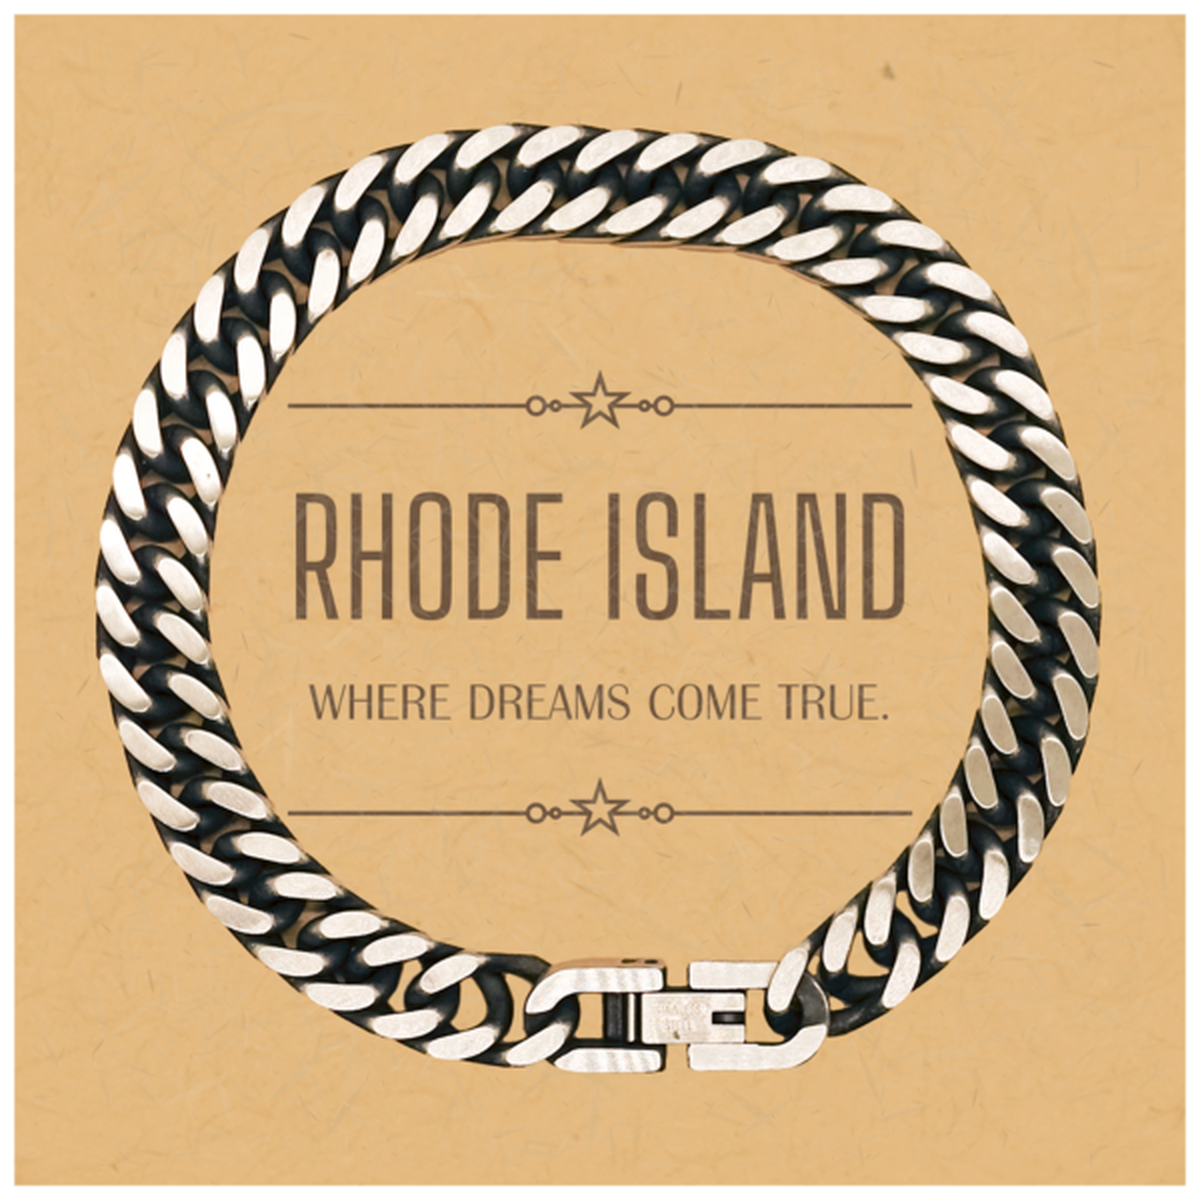 Love Rhode Island State Cuban Link Chain Bracelet, Rhode Island Where dreams come true, Birthday Christmas Inspirational Gifts For Rhode Island Men, Women, Friends